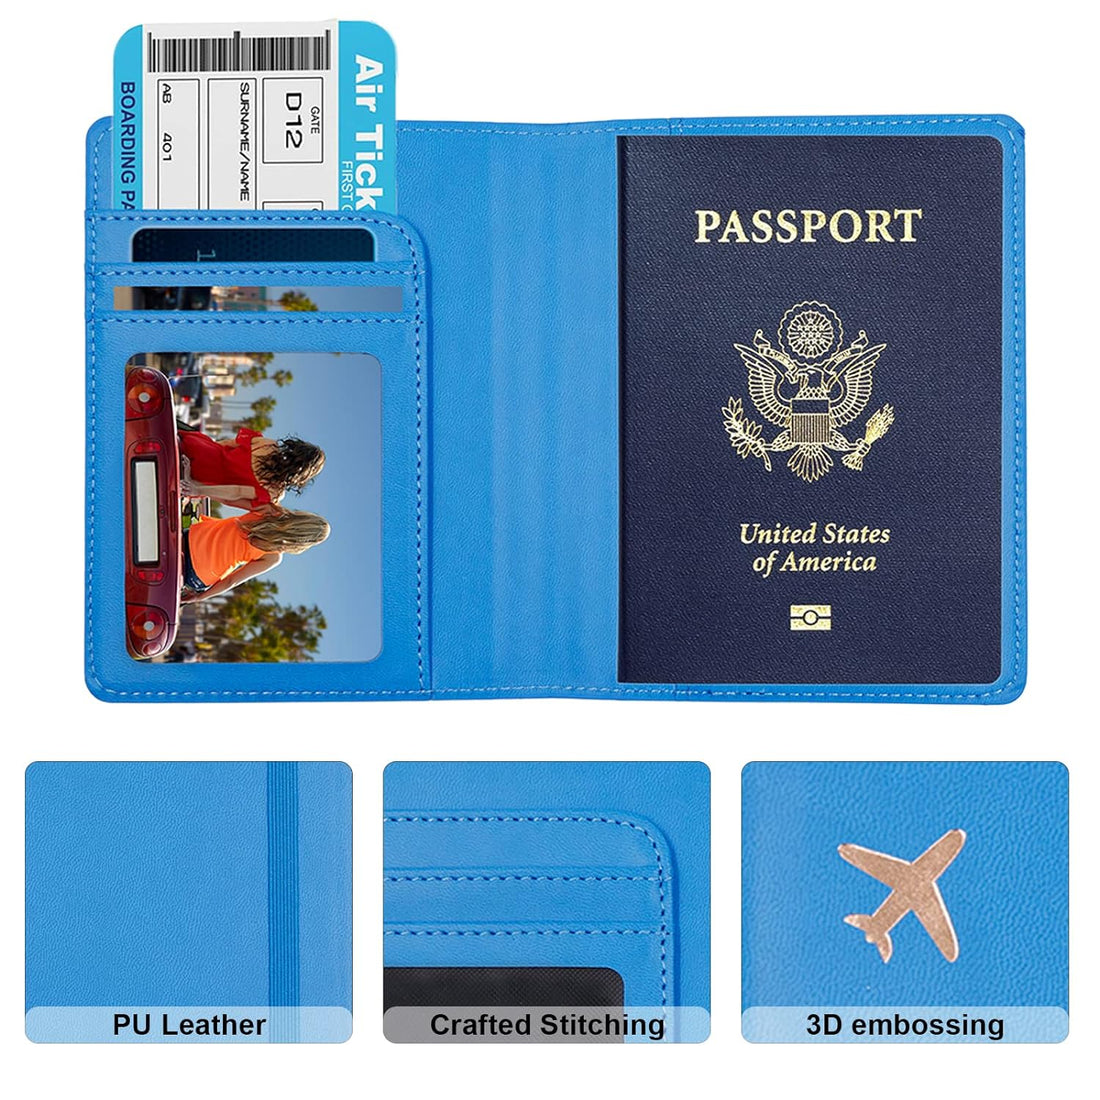 Deziliao Passport and Vaccine Card Holder Combo, PU Leather Passport Holder with Vaccine Card Slot, Passport Wallet for Men and Women, Blue, Basic